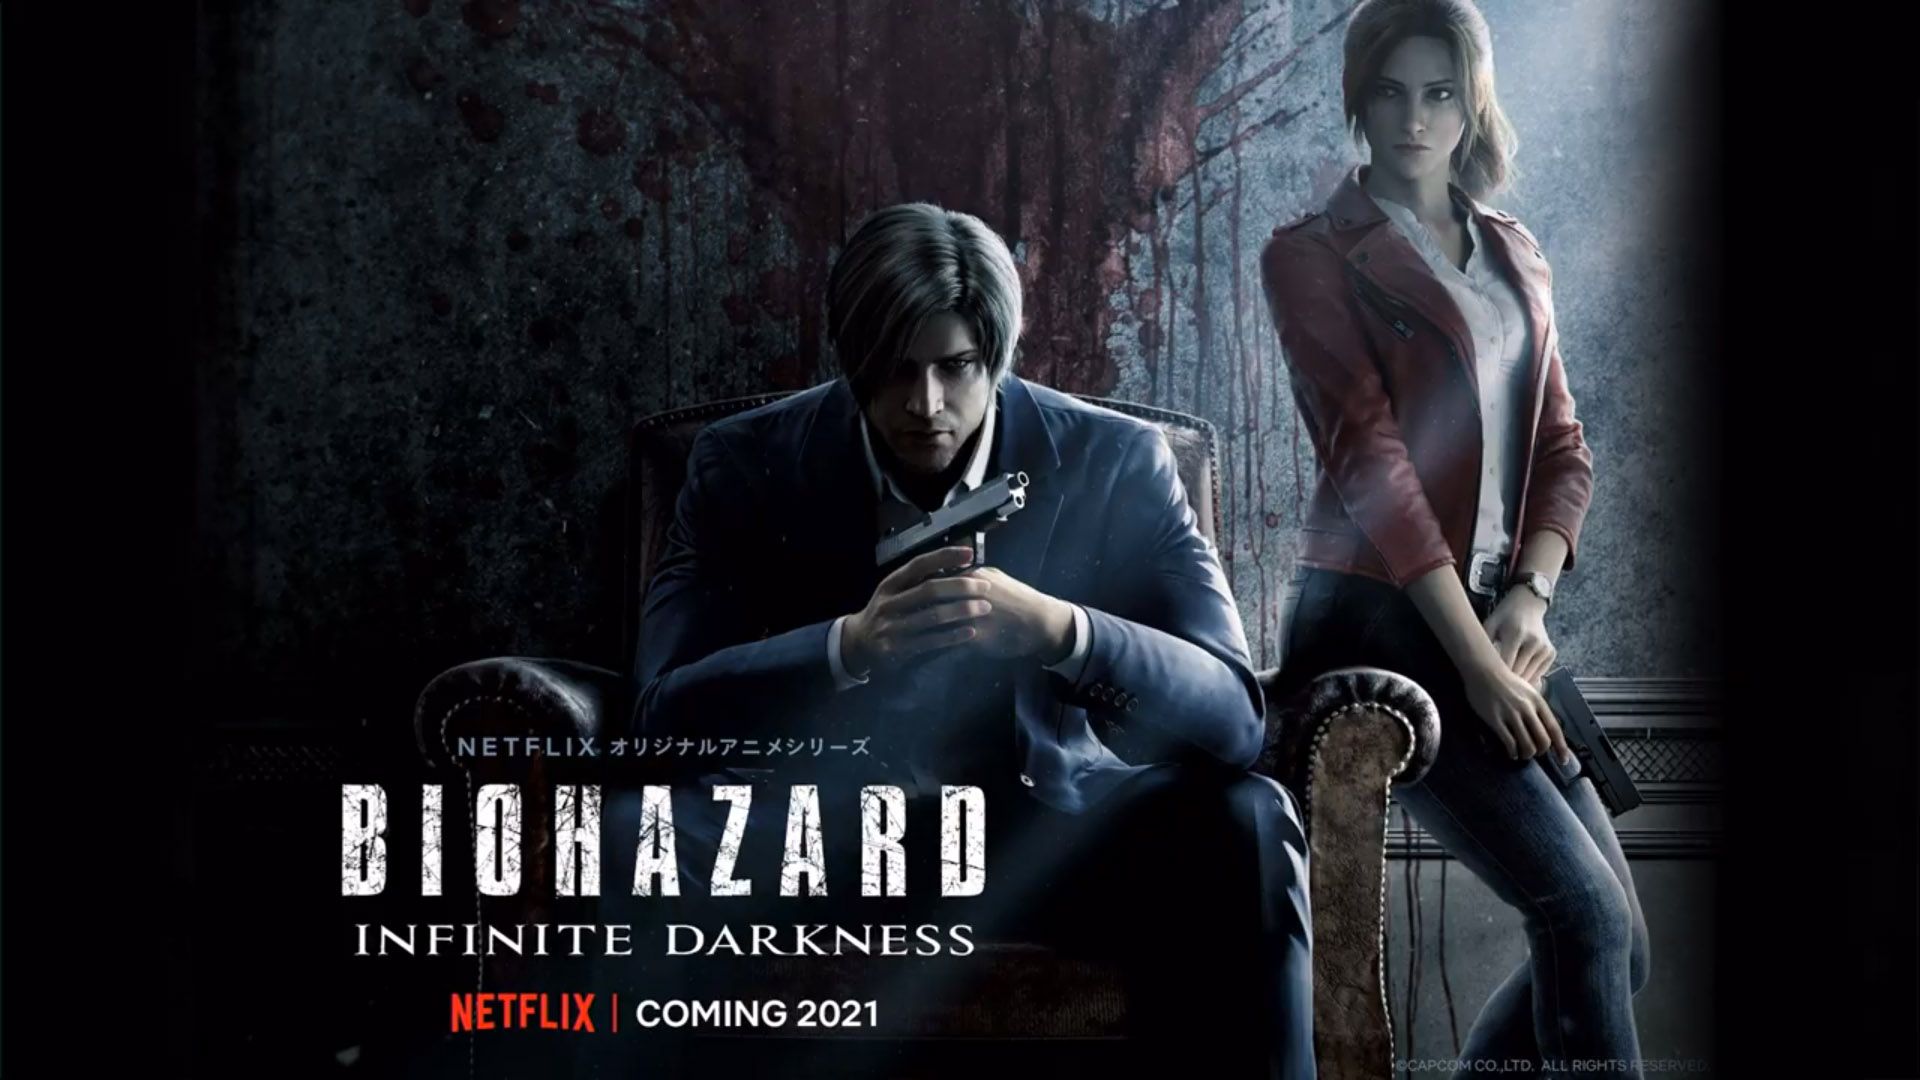 Netflix Resident Evil Infinite Darkness Wallpapers